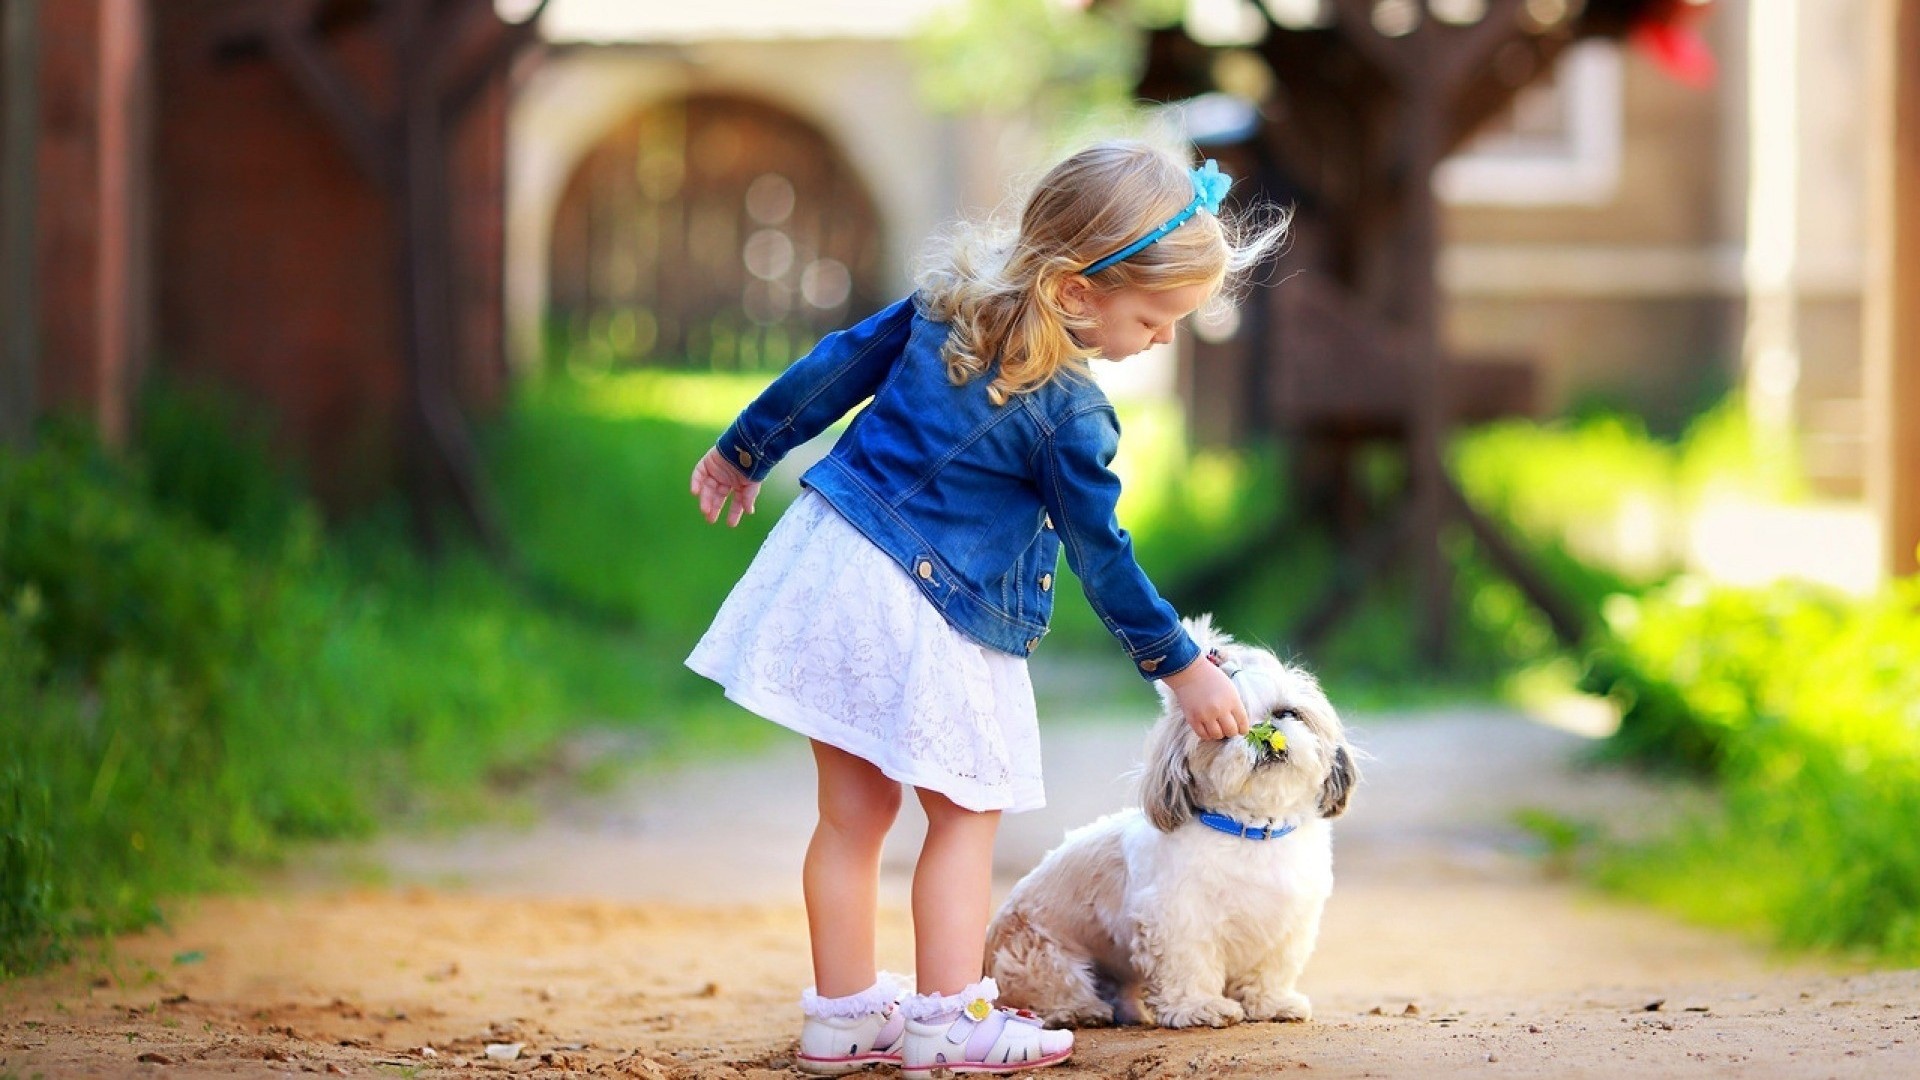 1920x1080 Baby Girl Friendship With Dog | 1920 x 1080 ...